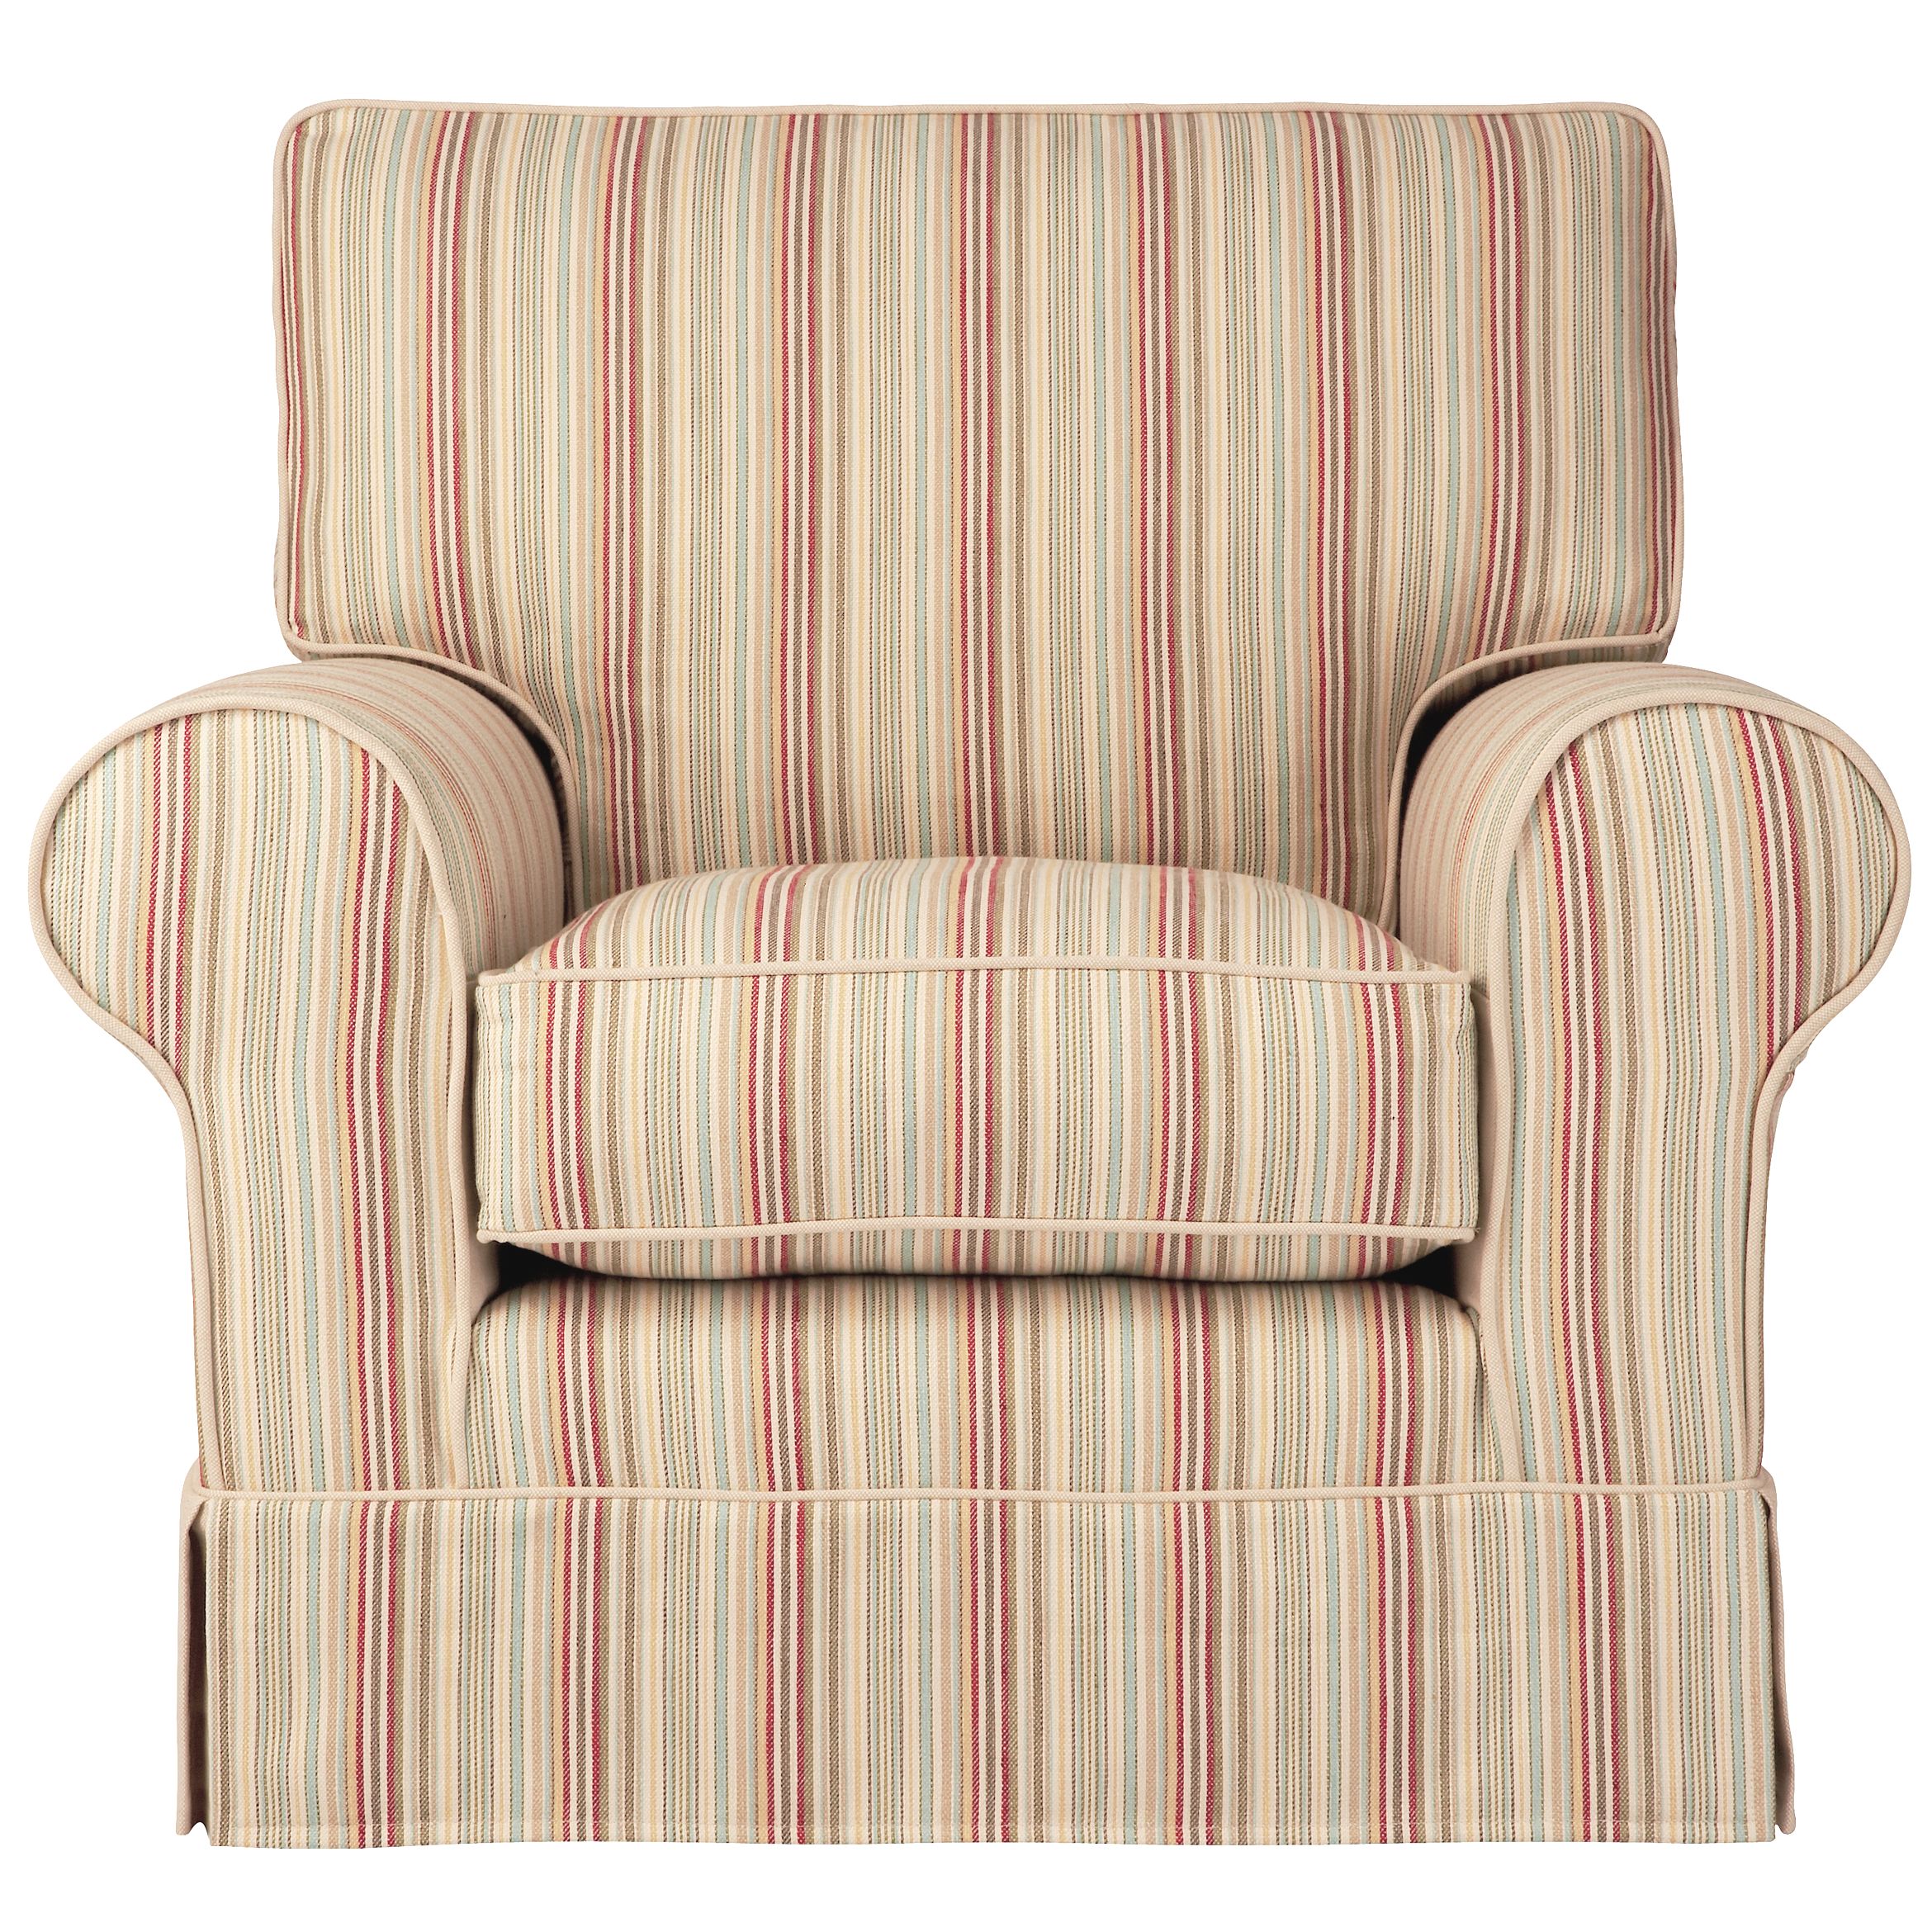 John Lewis Padstow Chair, Stripe